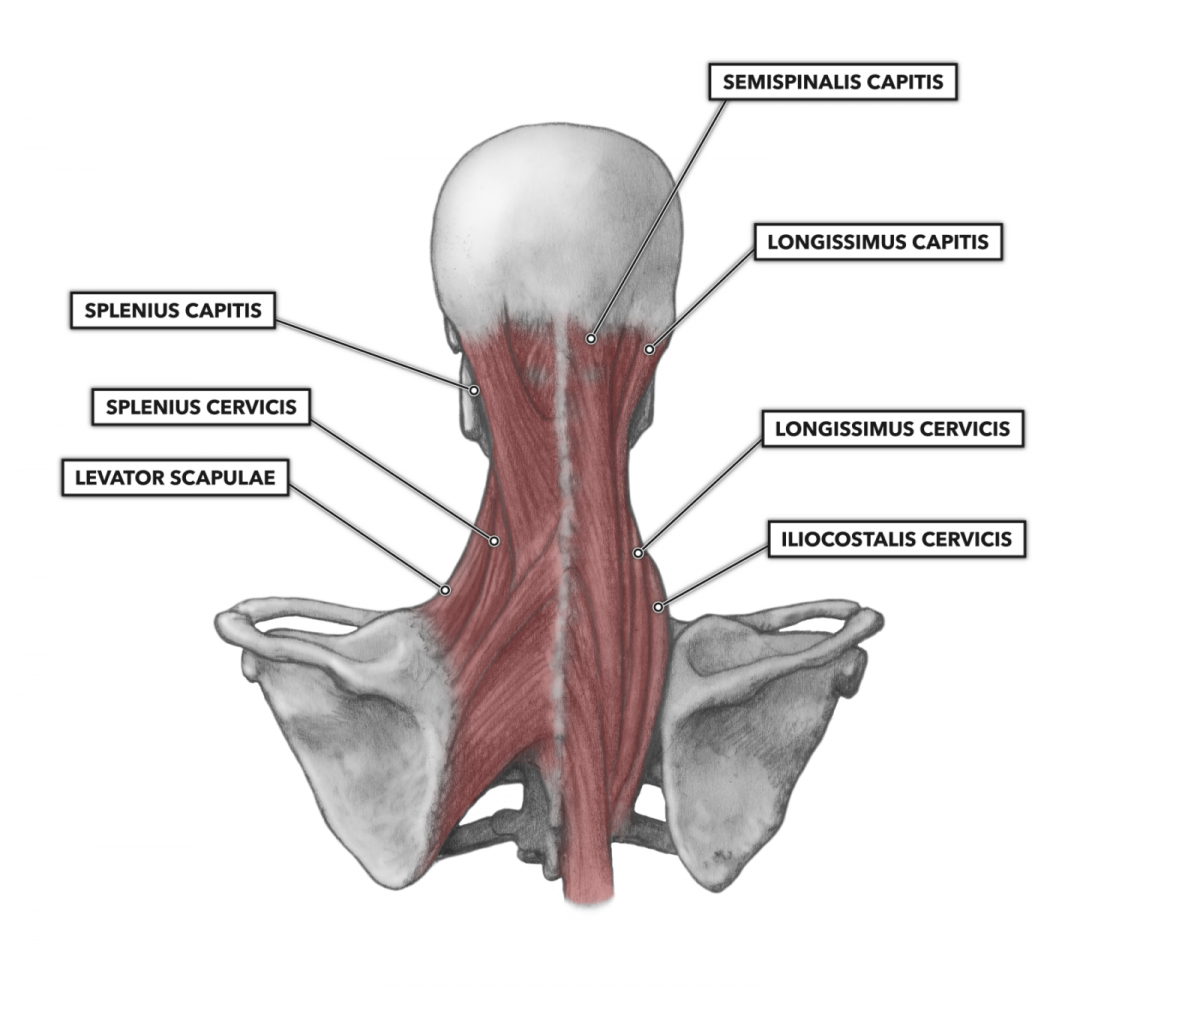 Musculus semispinalis